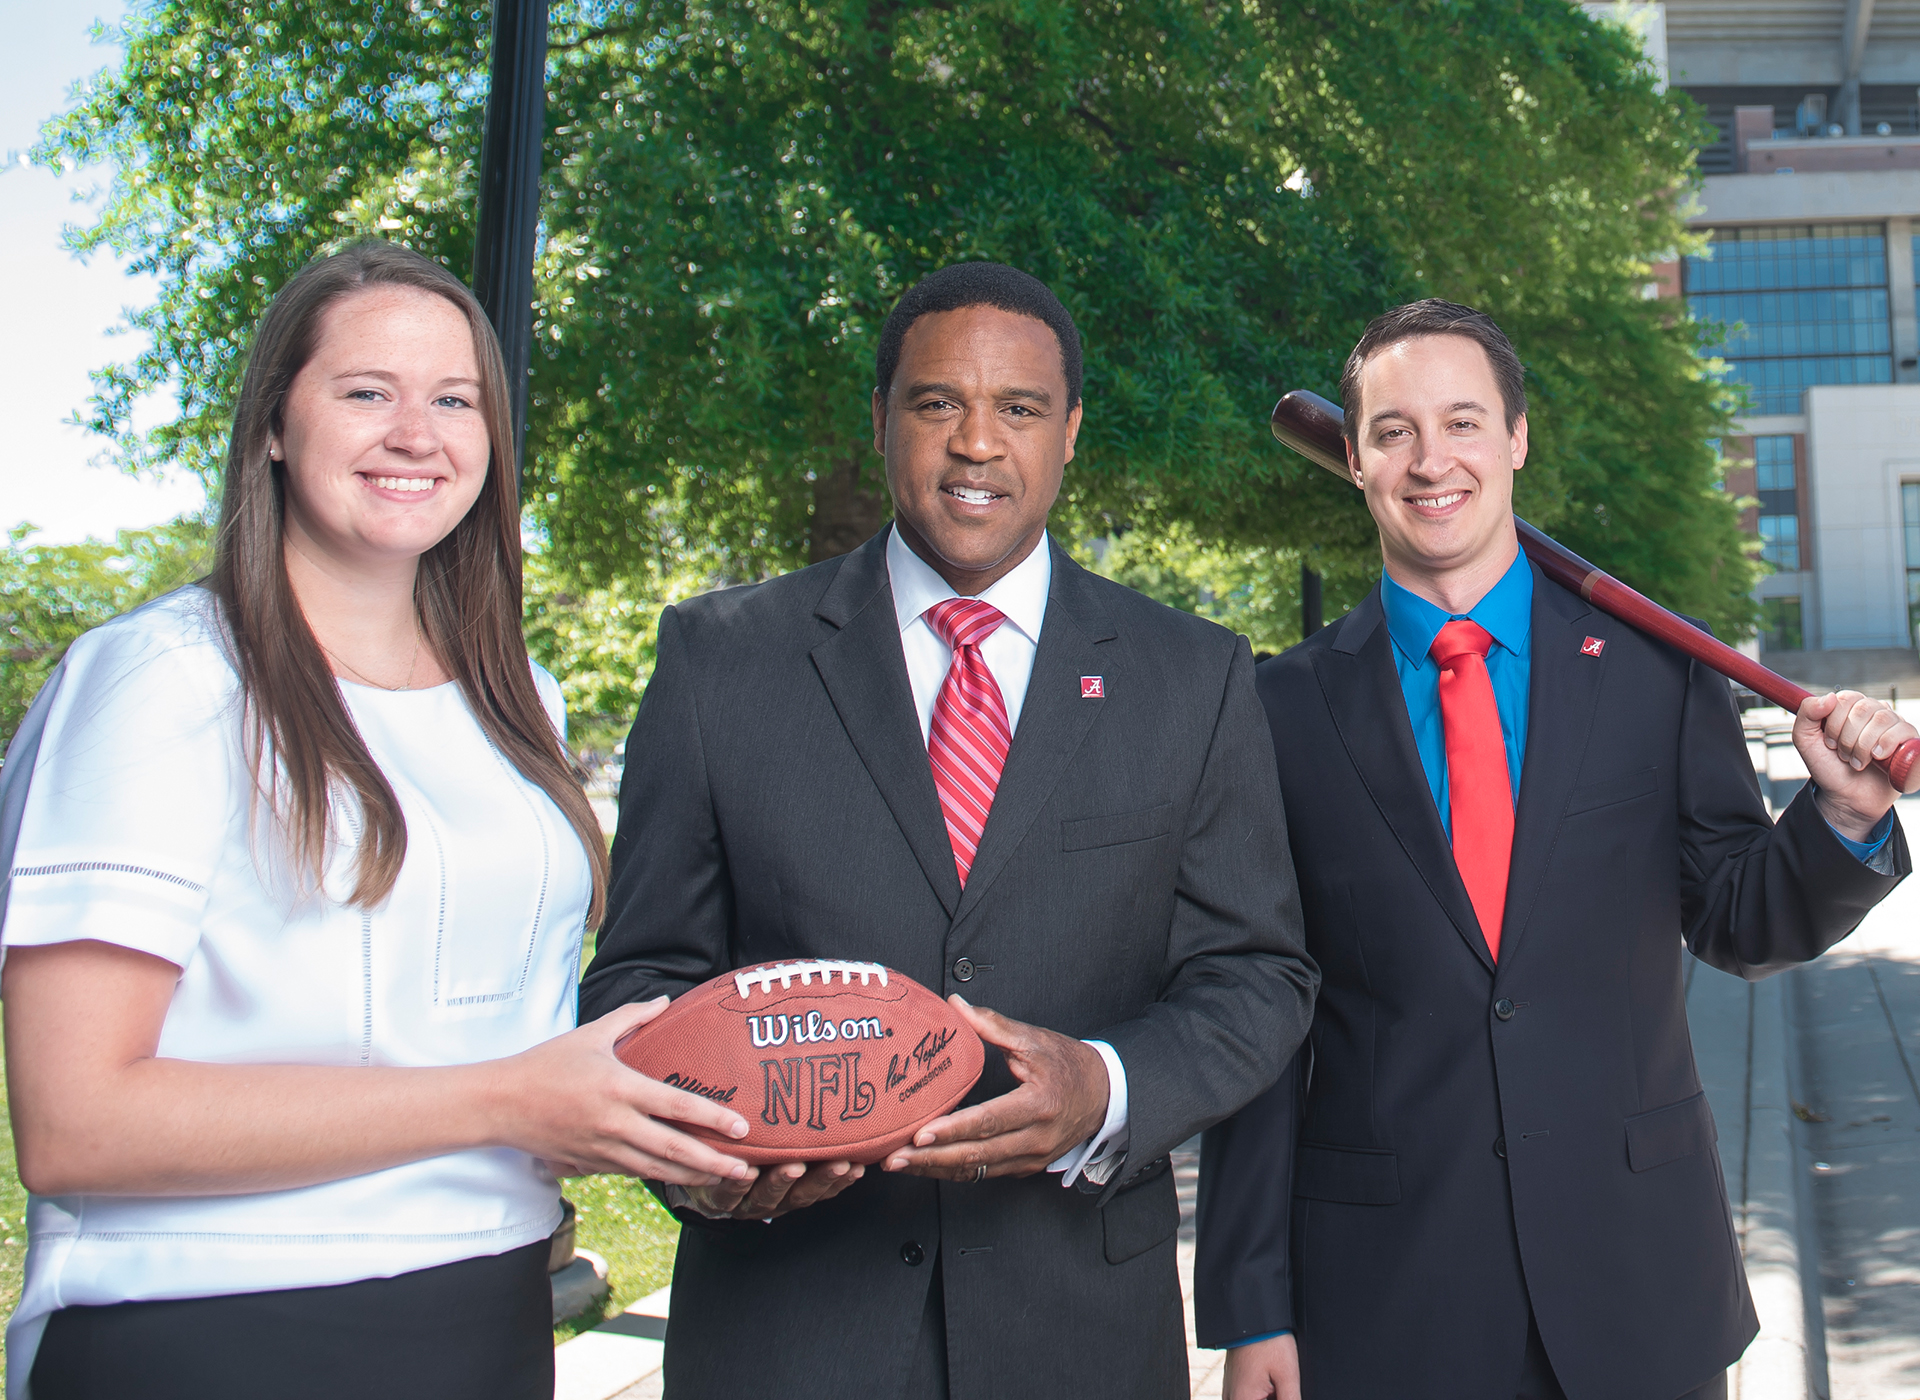 UA Professor Uses NFL Experience to Prepare Students